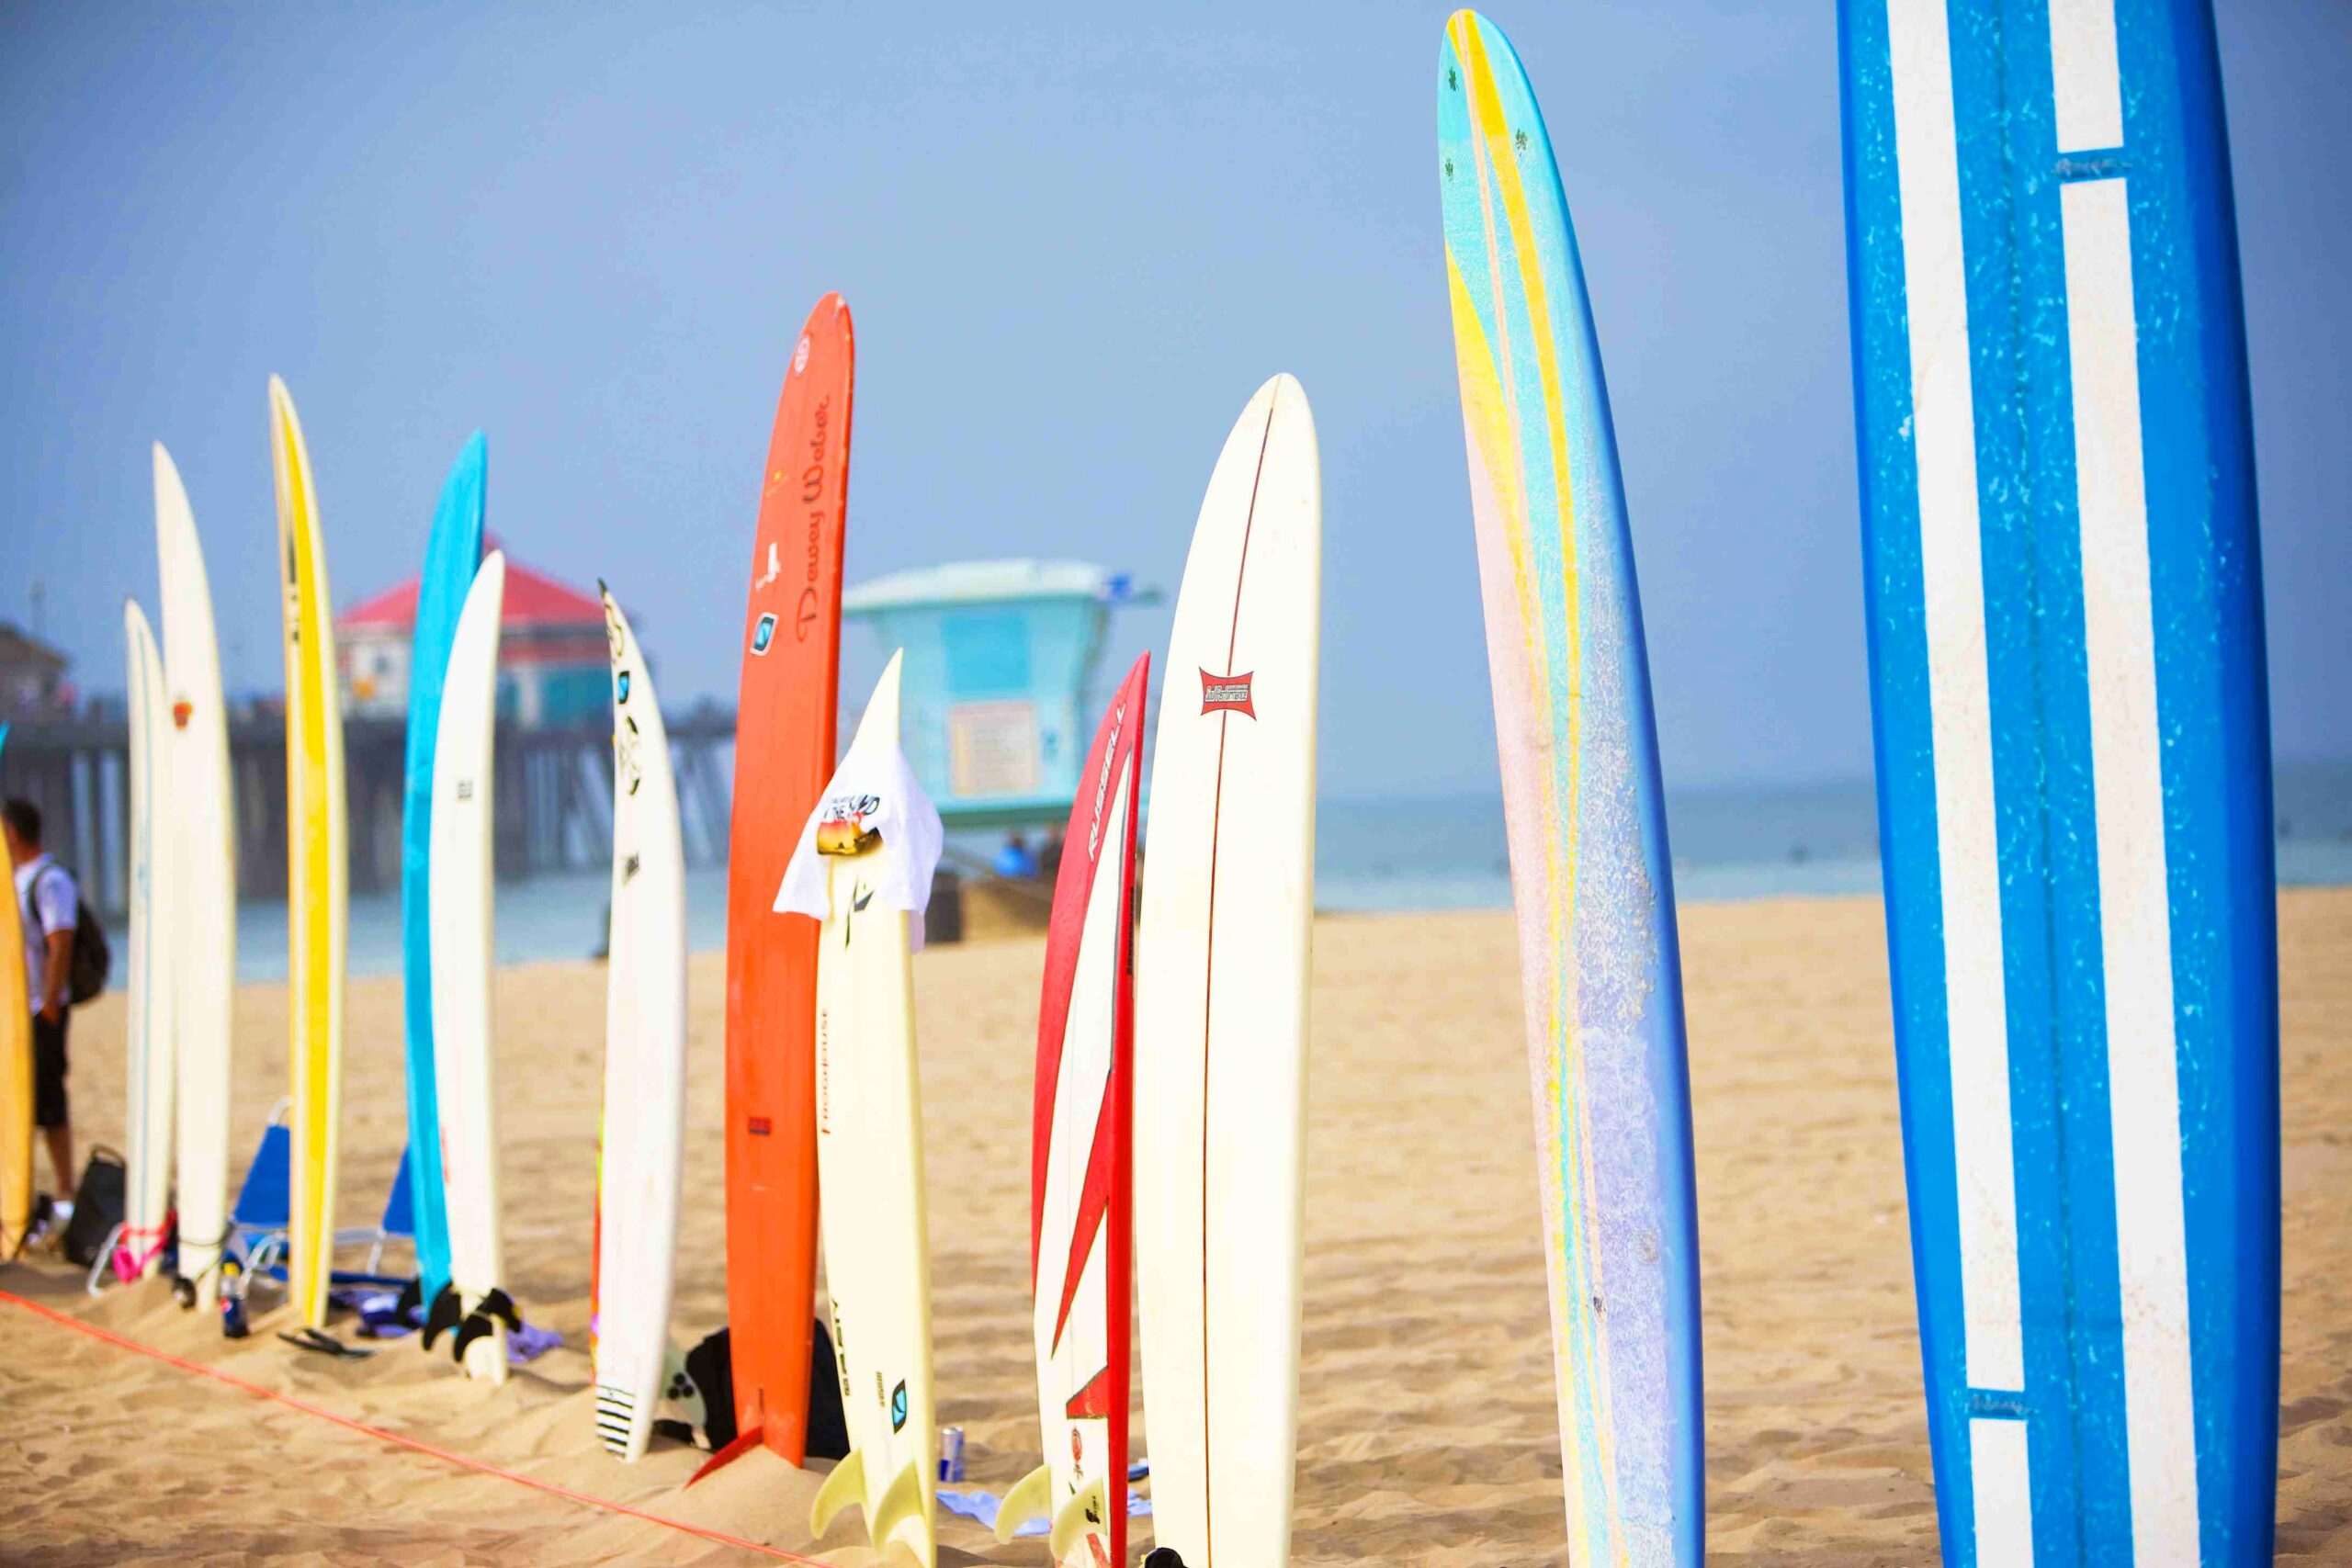 Board show. Доска для сёрфинга. Пляж для серфинга. Доска для сёрфинга на пляже. Доска для серфинга в песке.